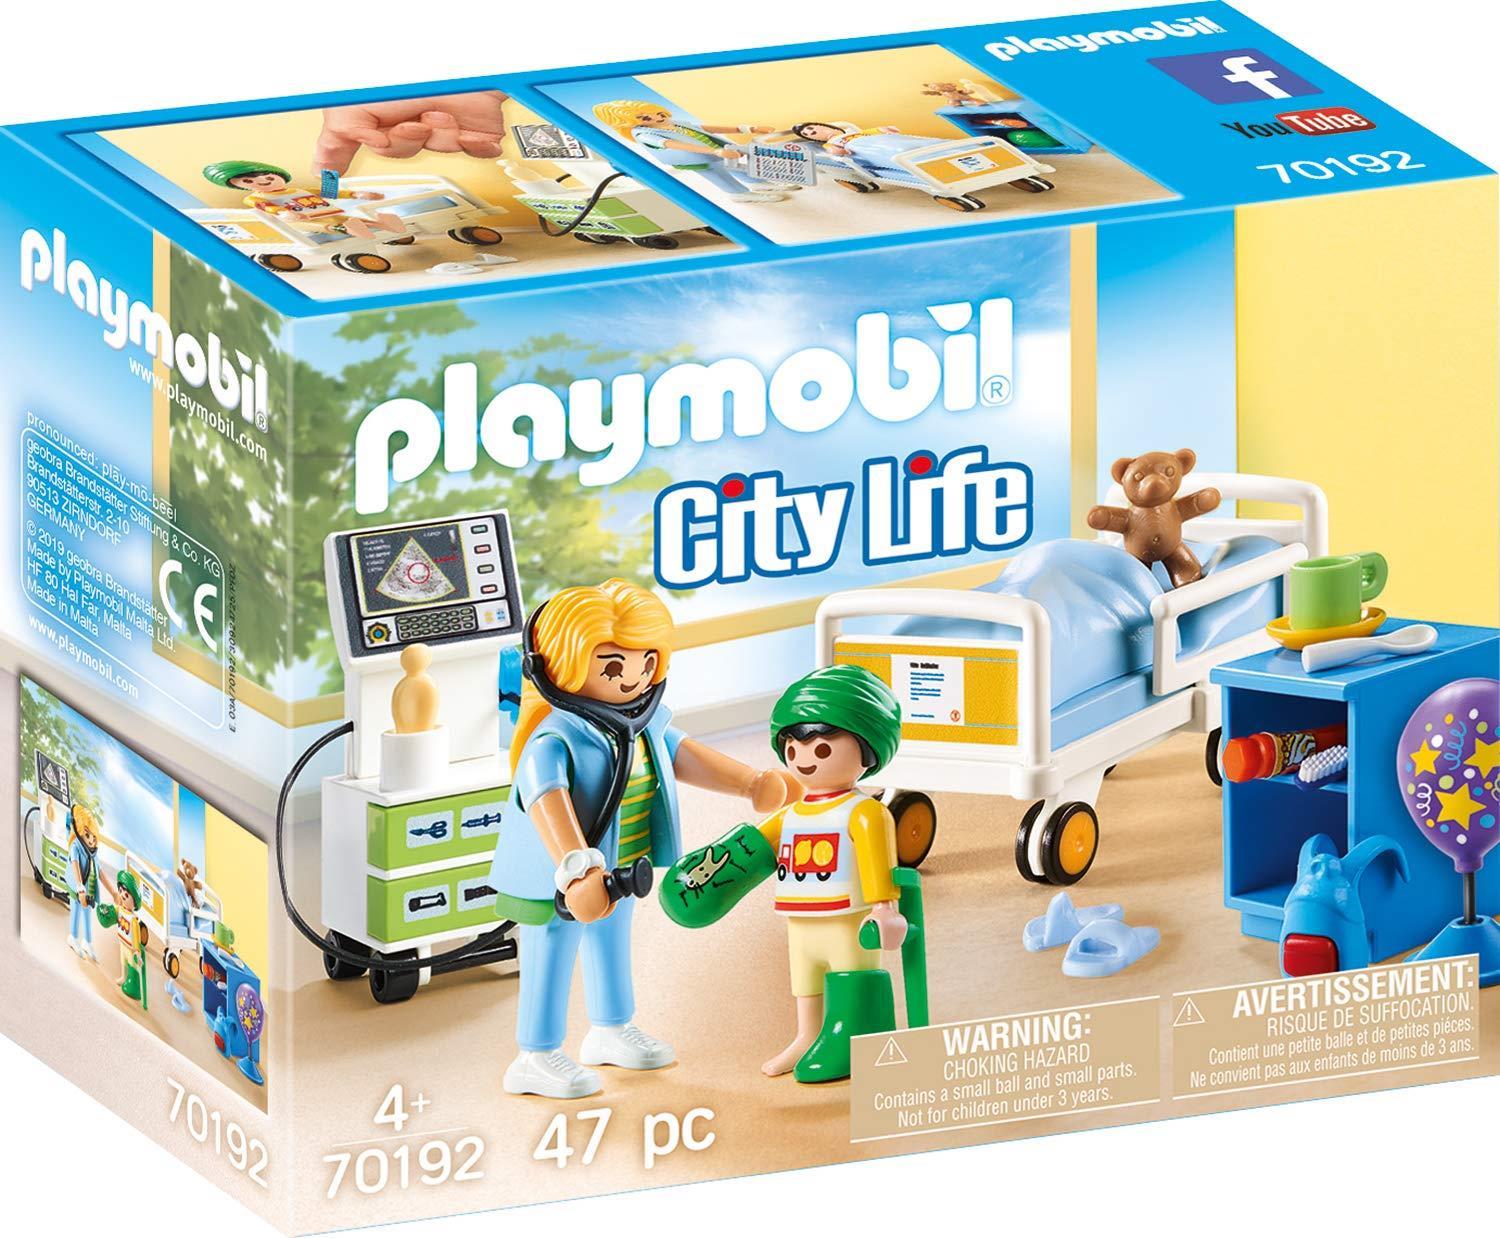 Playmobil City Life 70192 (70192)